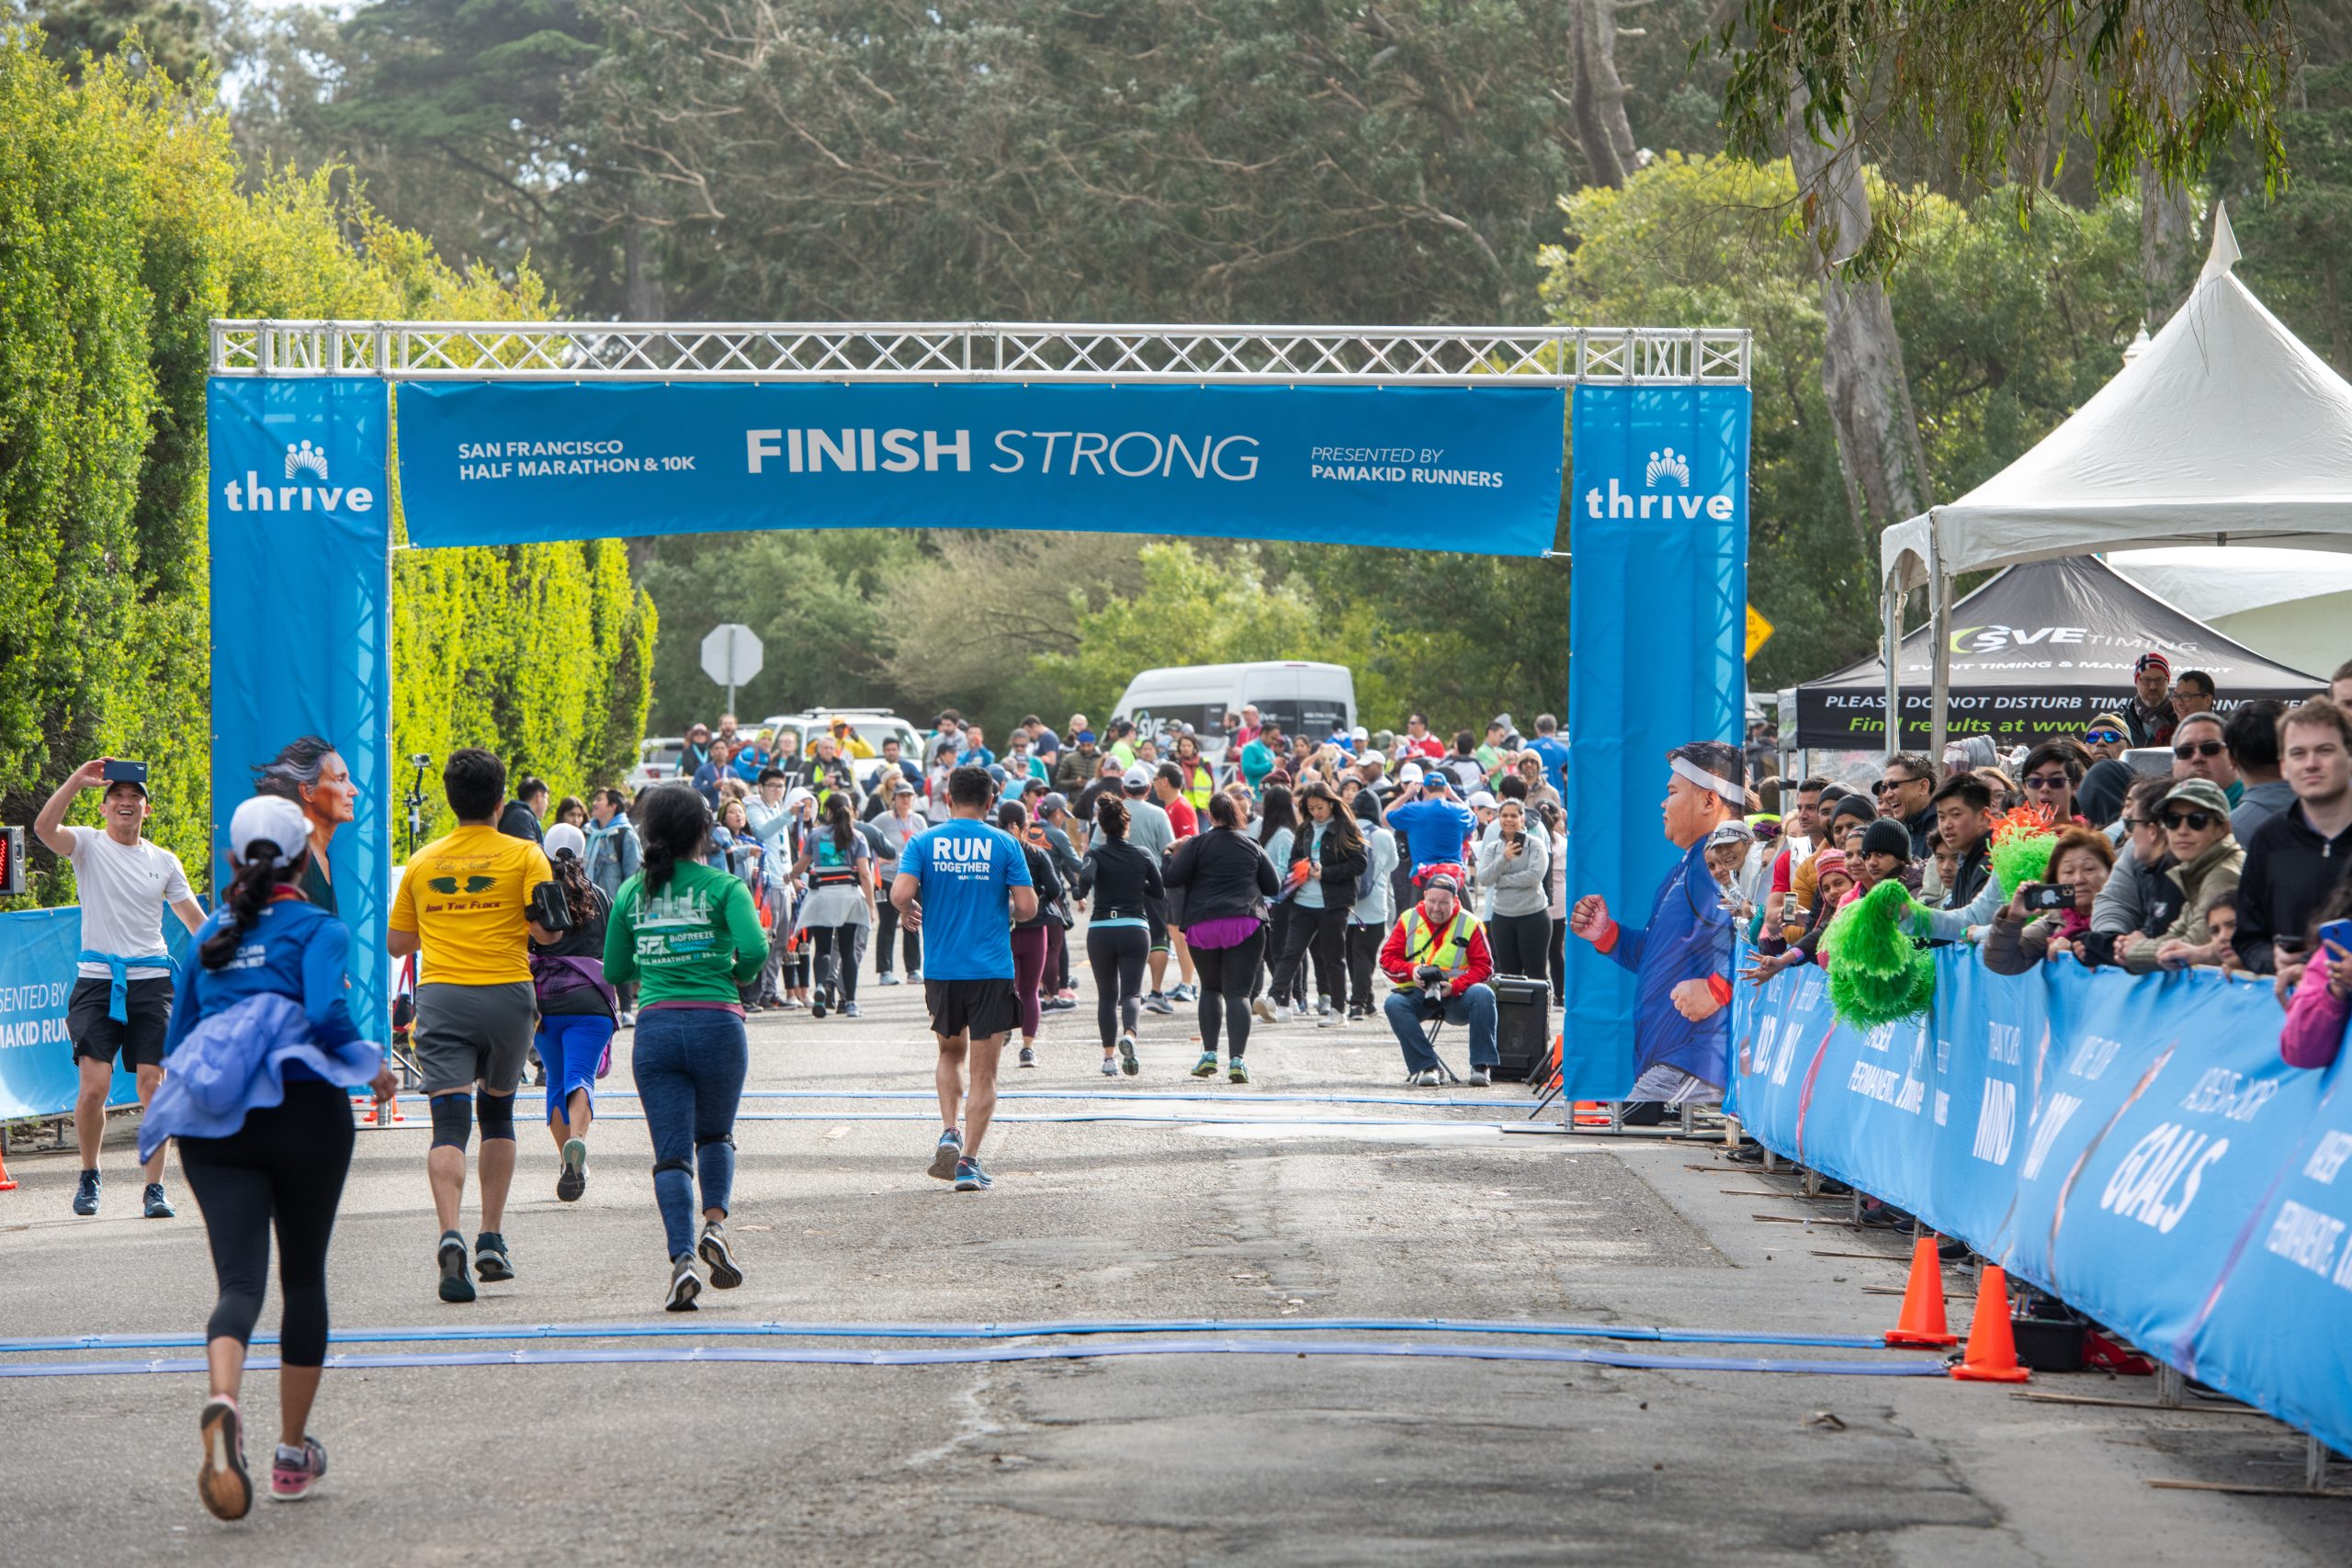 San Francisco Half Marathon Returns for its 39th Year as Kaiser Permanente Renews its LongTime